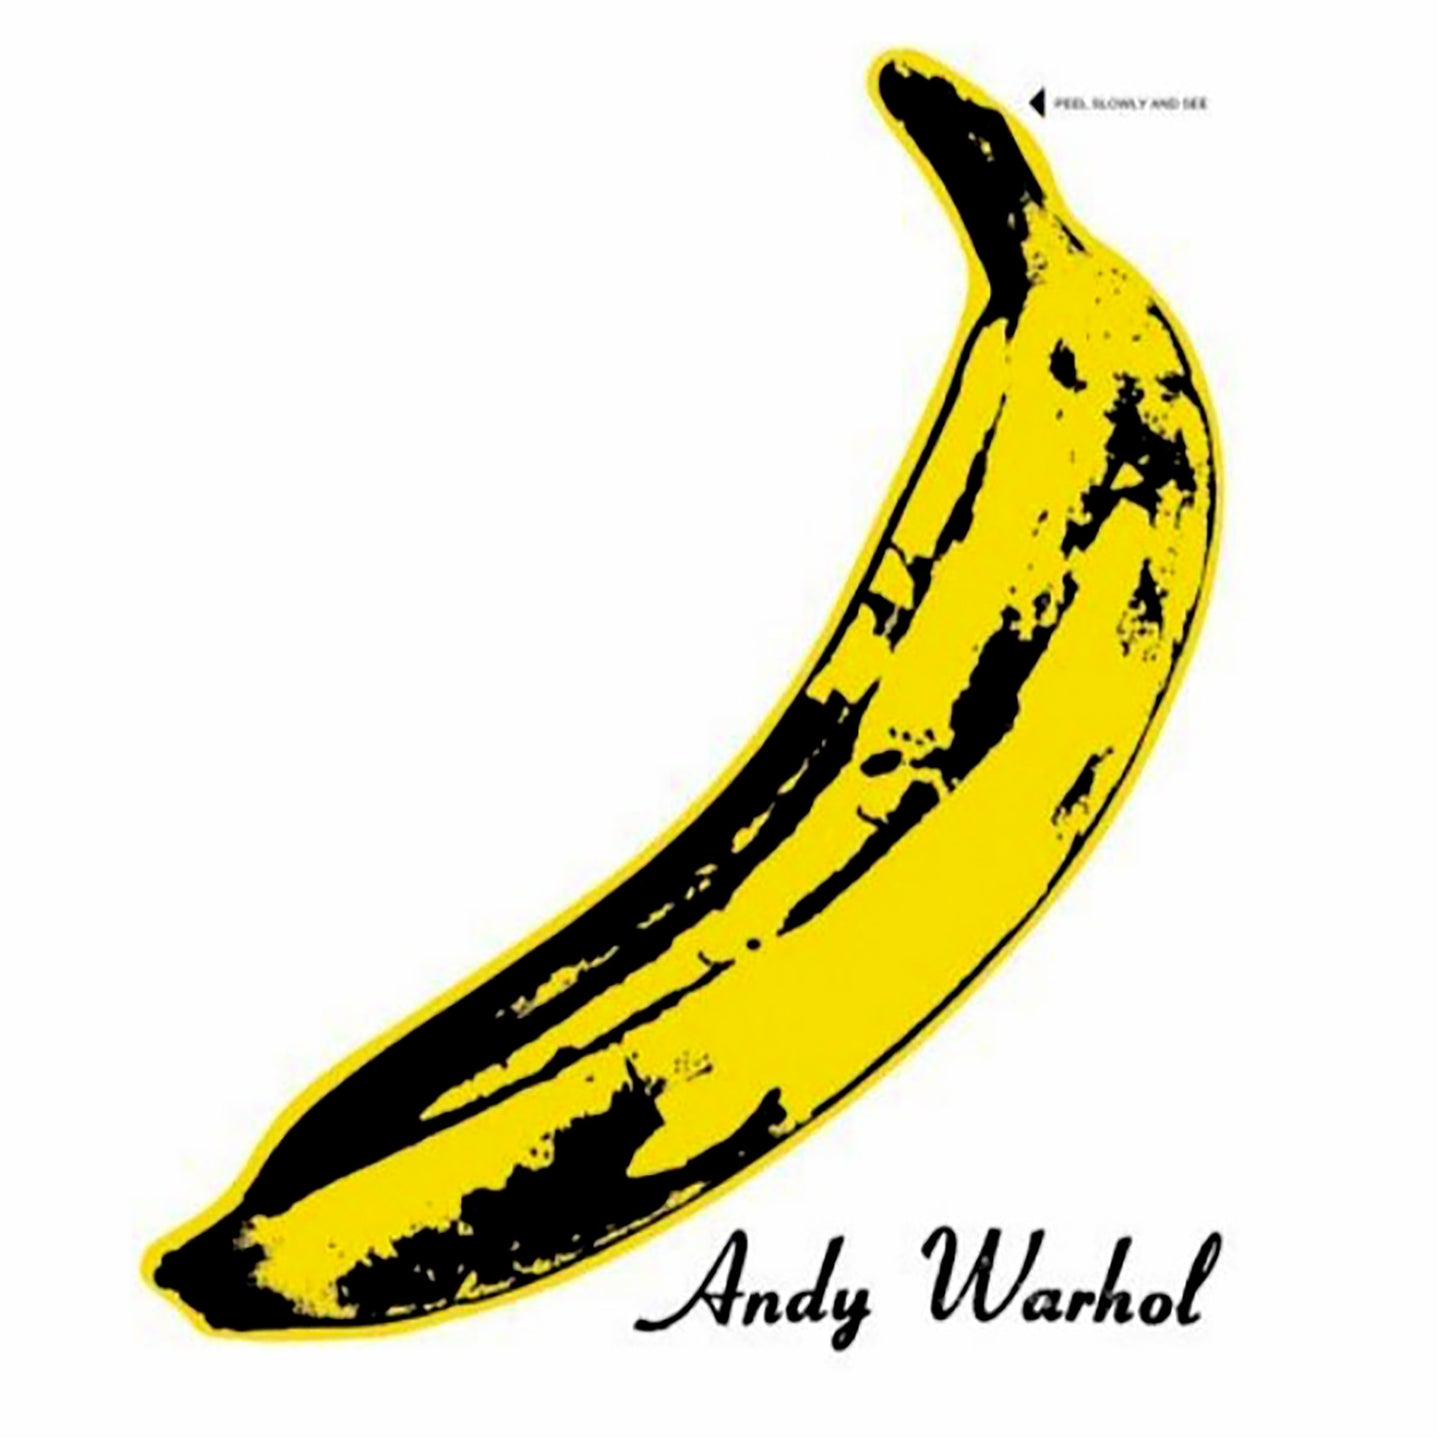 Velvet Underground - The Velvet Underground & Nico (Reissue)